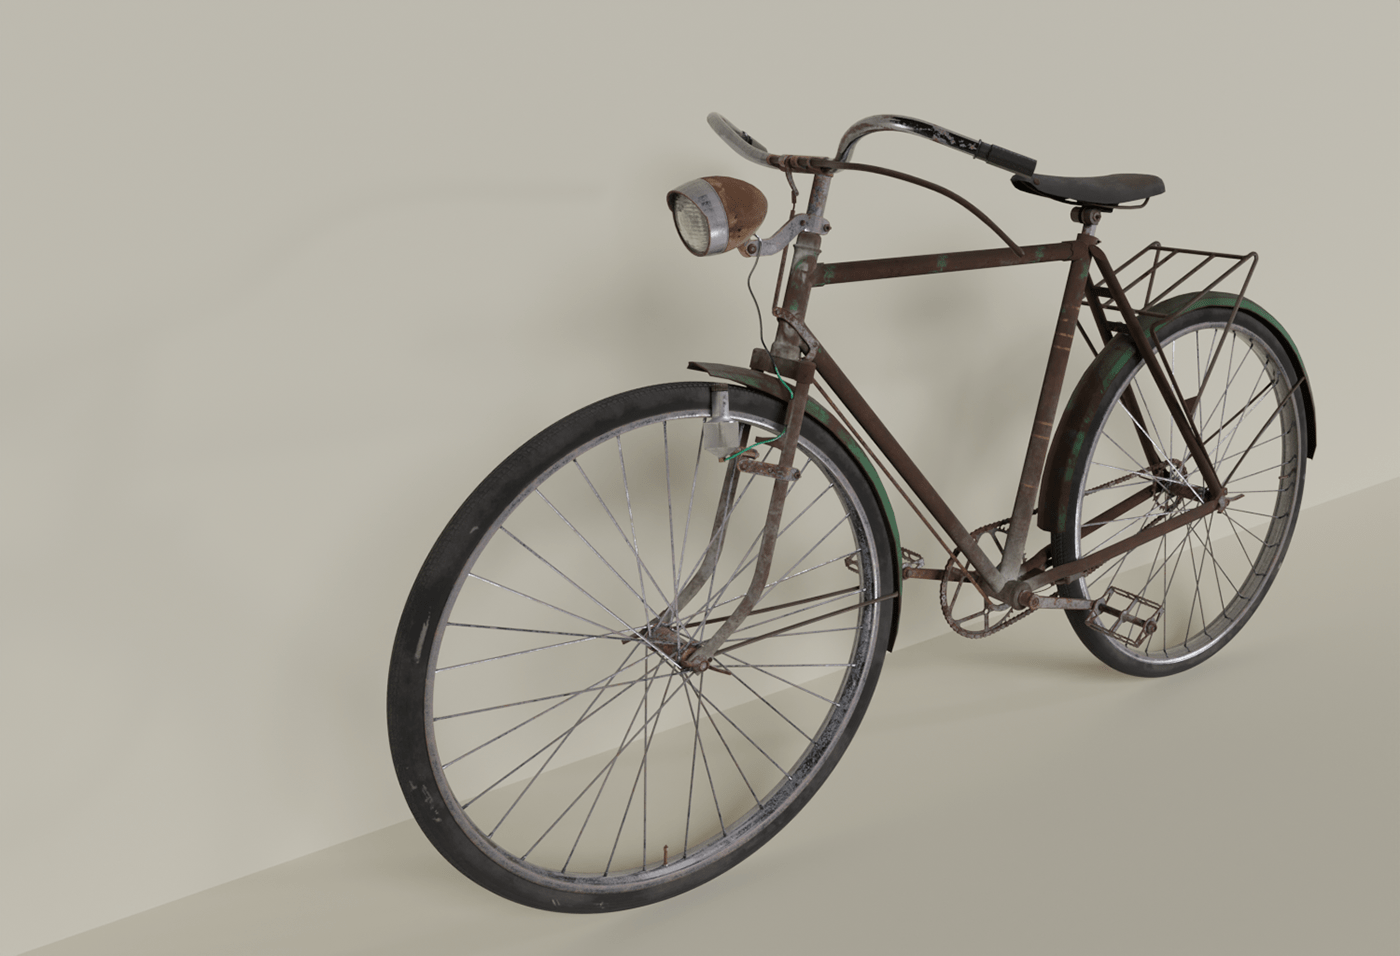 3dmodel Bicycle blender Substance Painter texturing Render 3D rust old oldbicycle